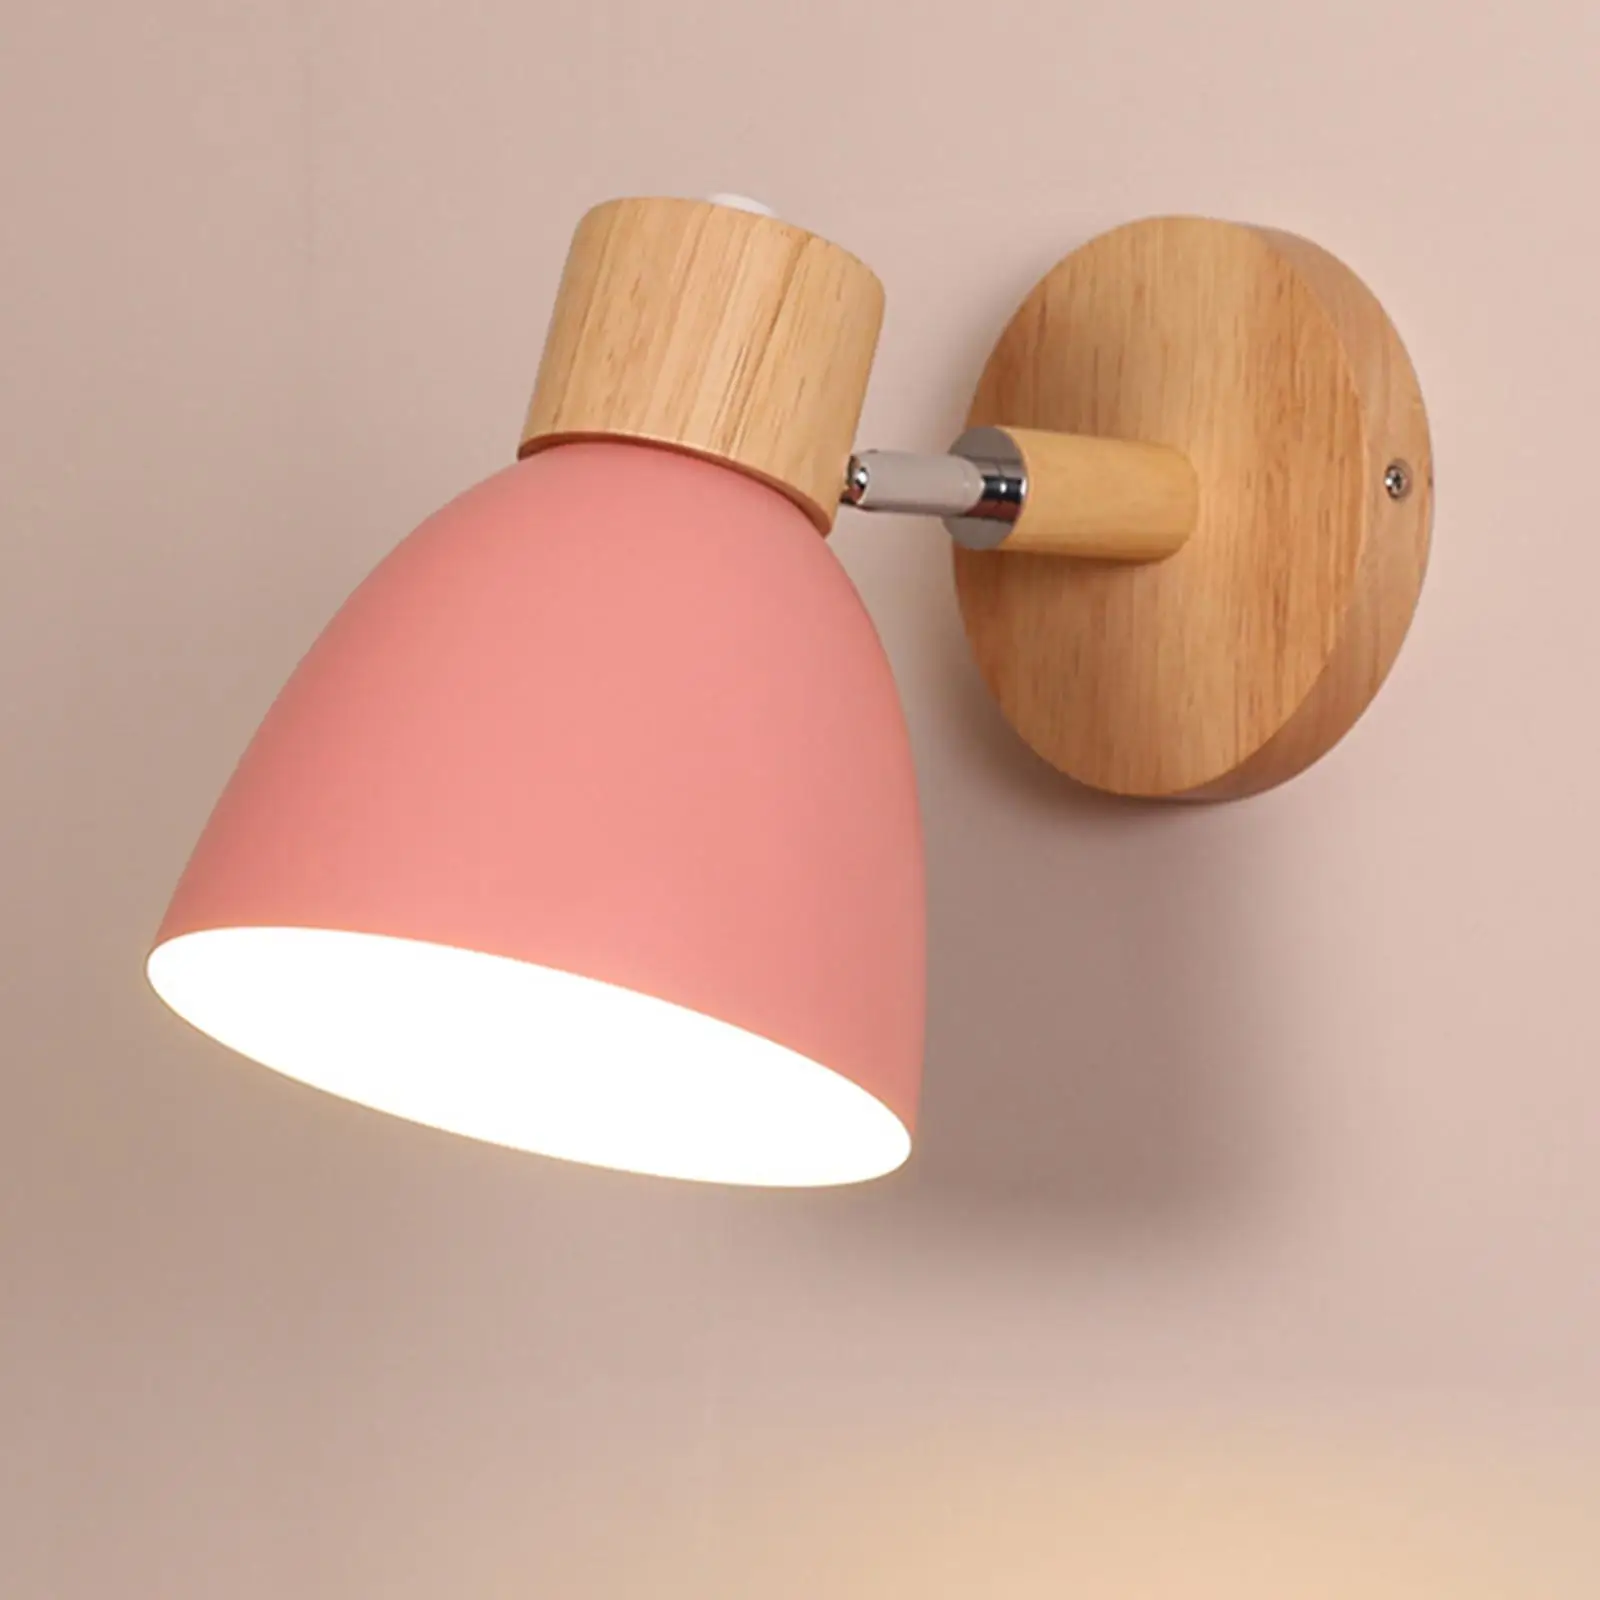 Modern Minimalist Wall Lamp Bedside Lamp Wood Wall Light Fixtures for Aisle